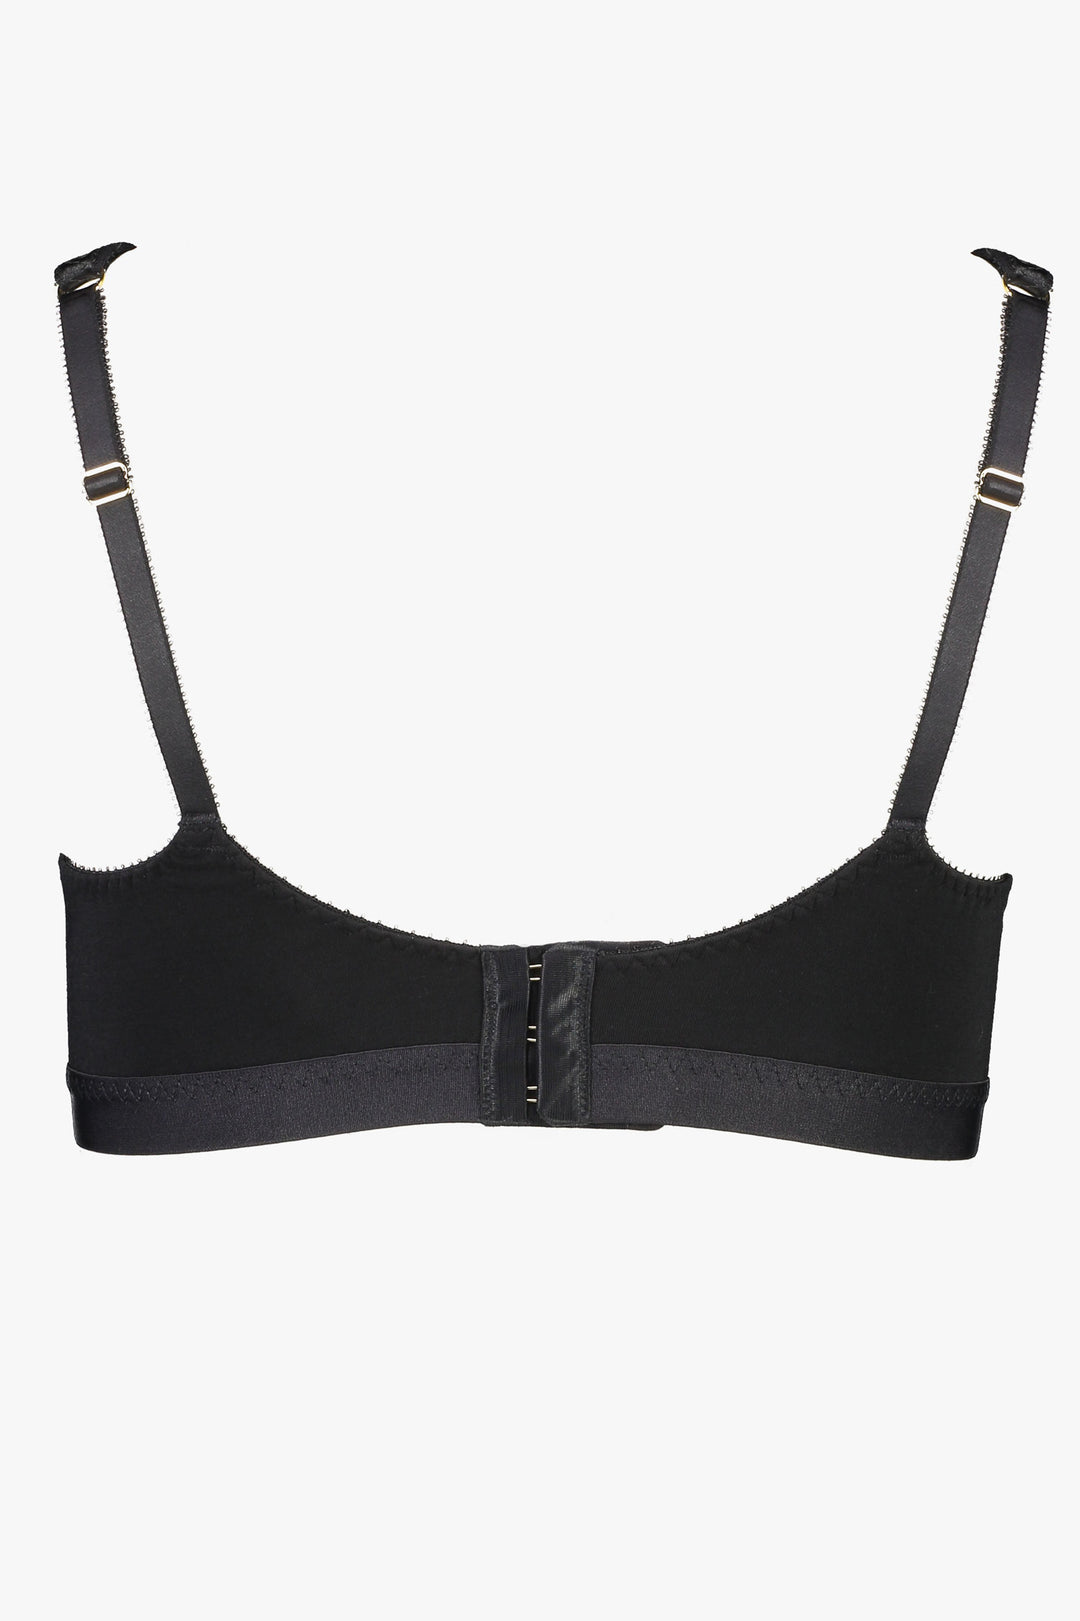 Videris Lingerie Belle nursing bra with adjustable straps and triple hook and eye closure in black